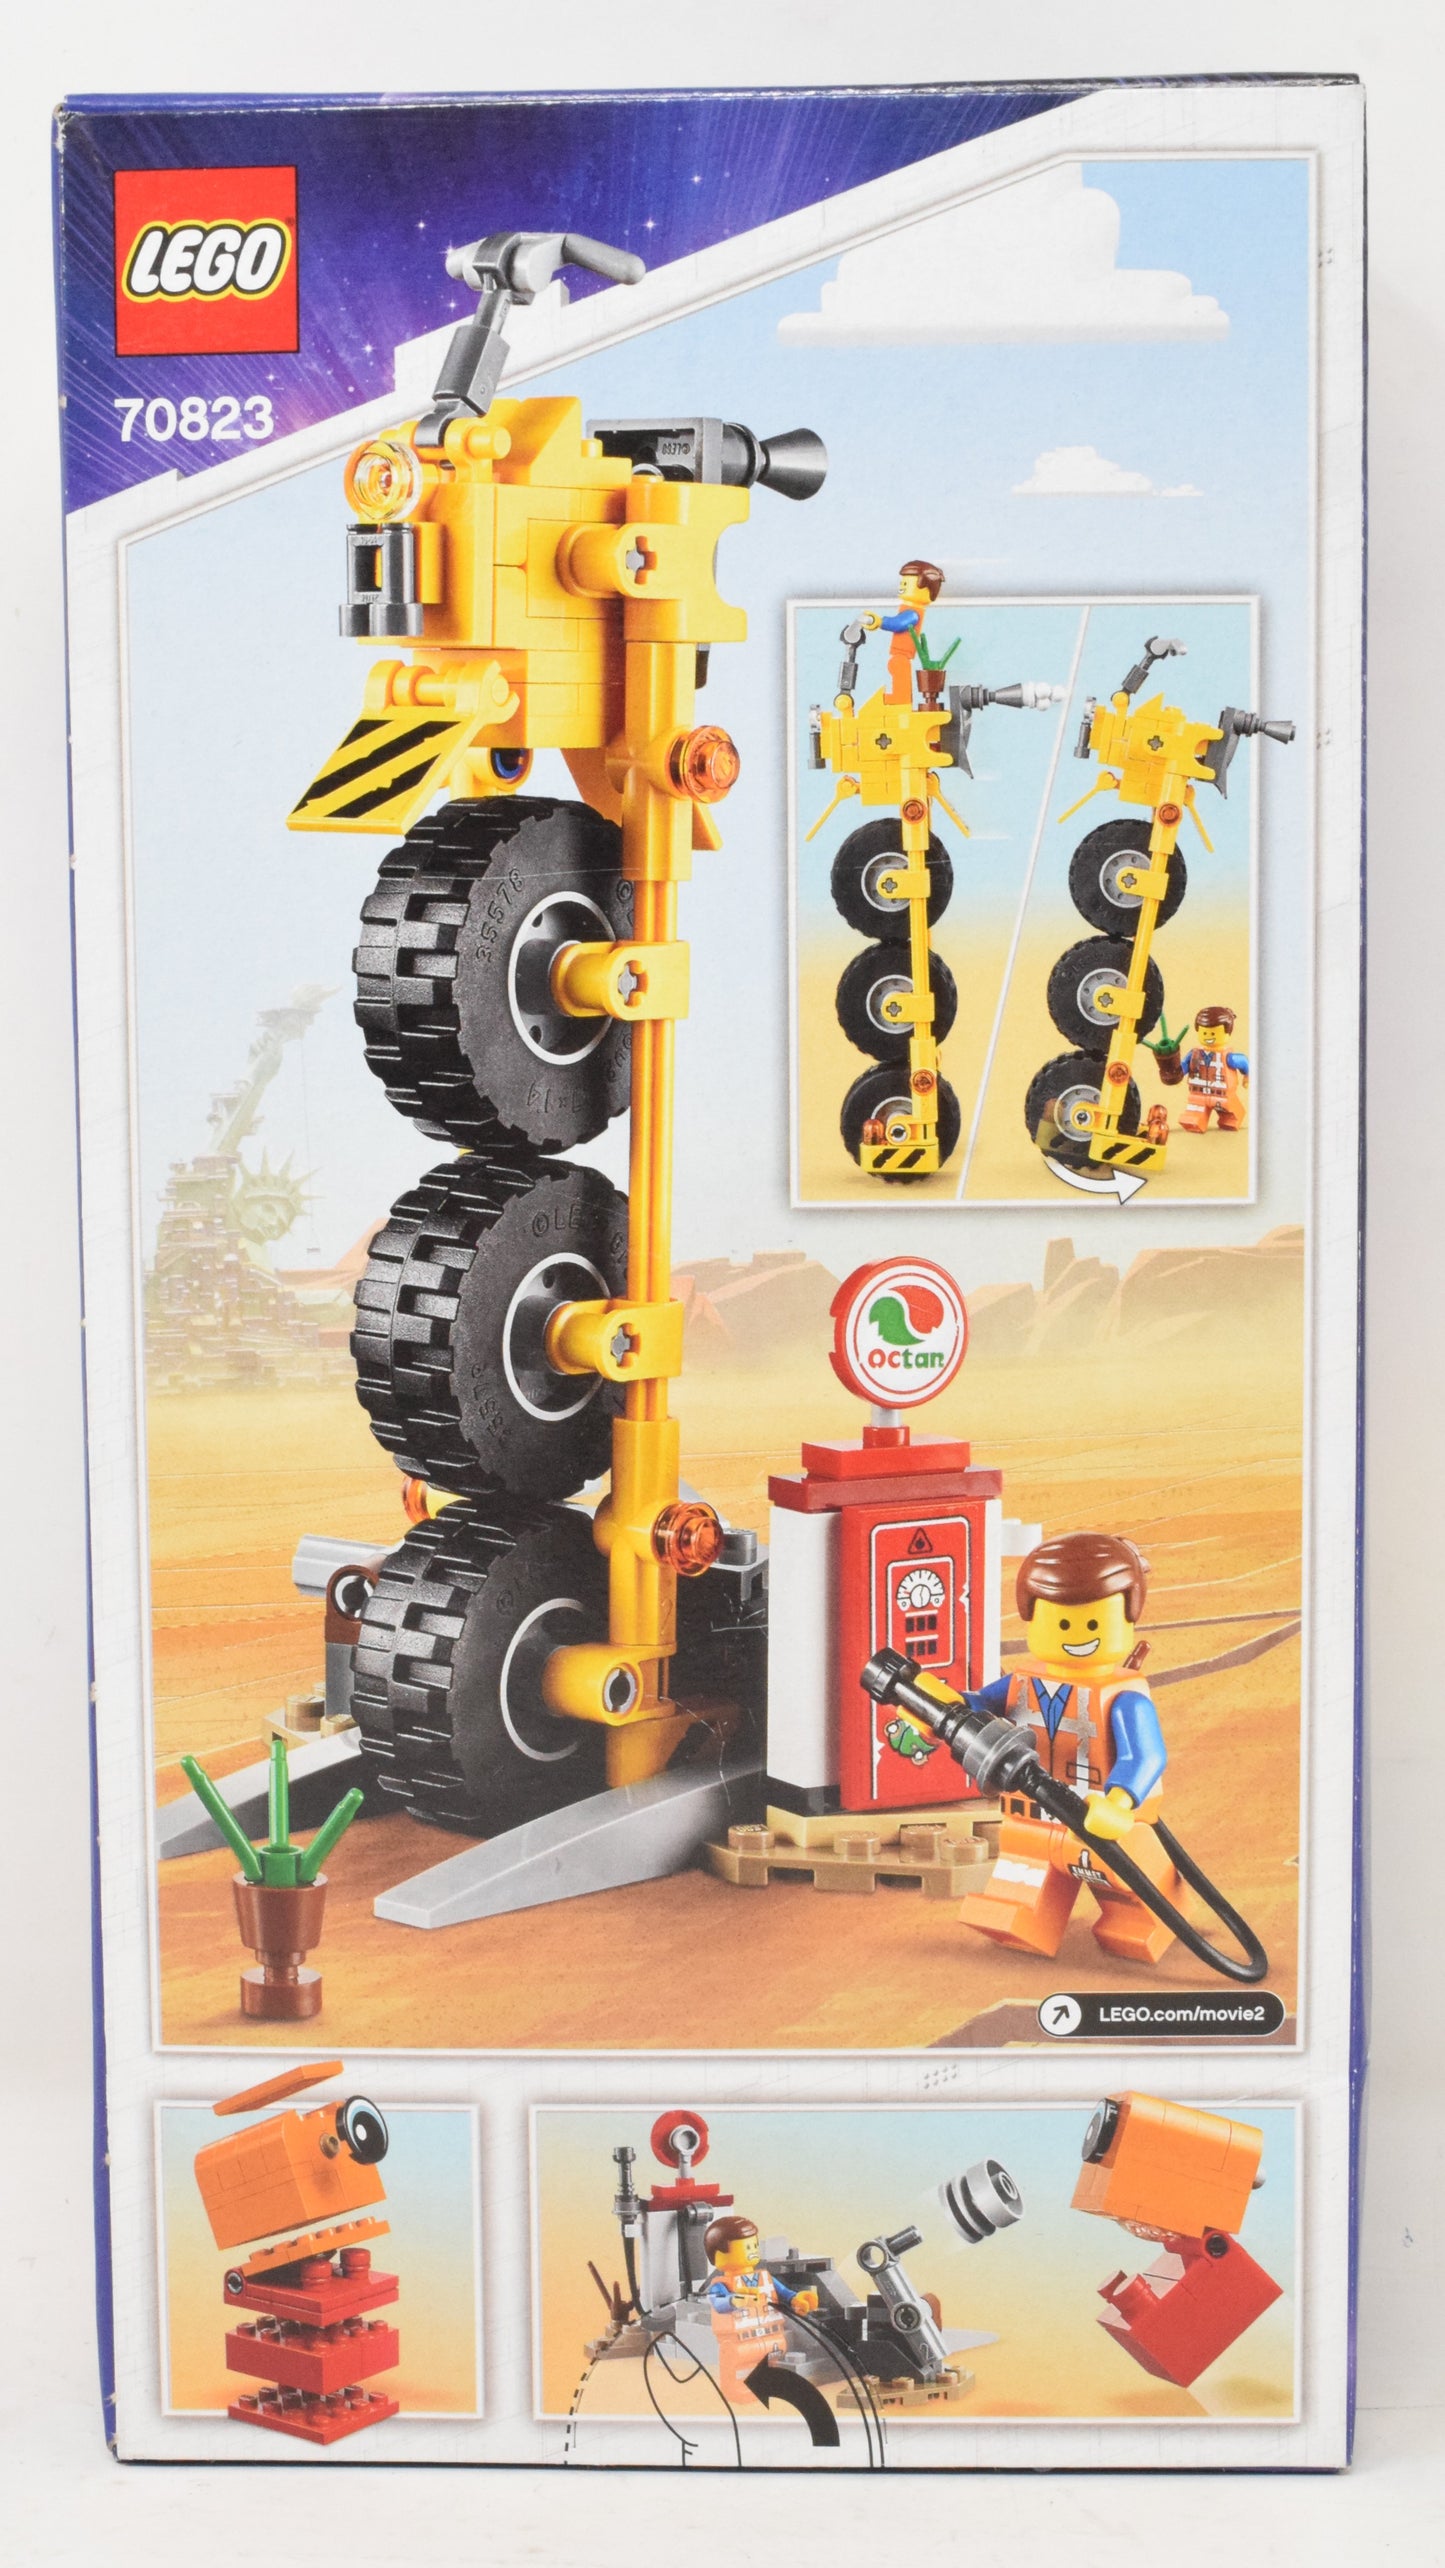 Lego movie Emmit Thricycle Set 70823 NIB New